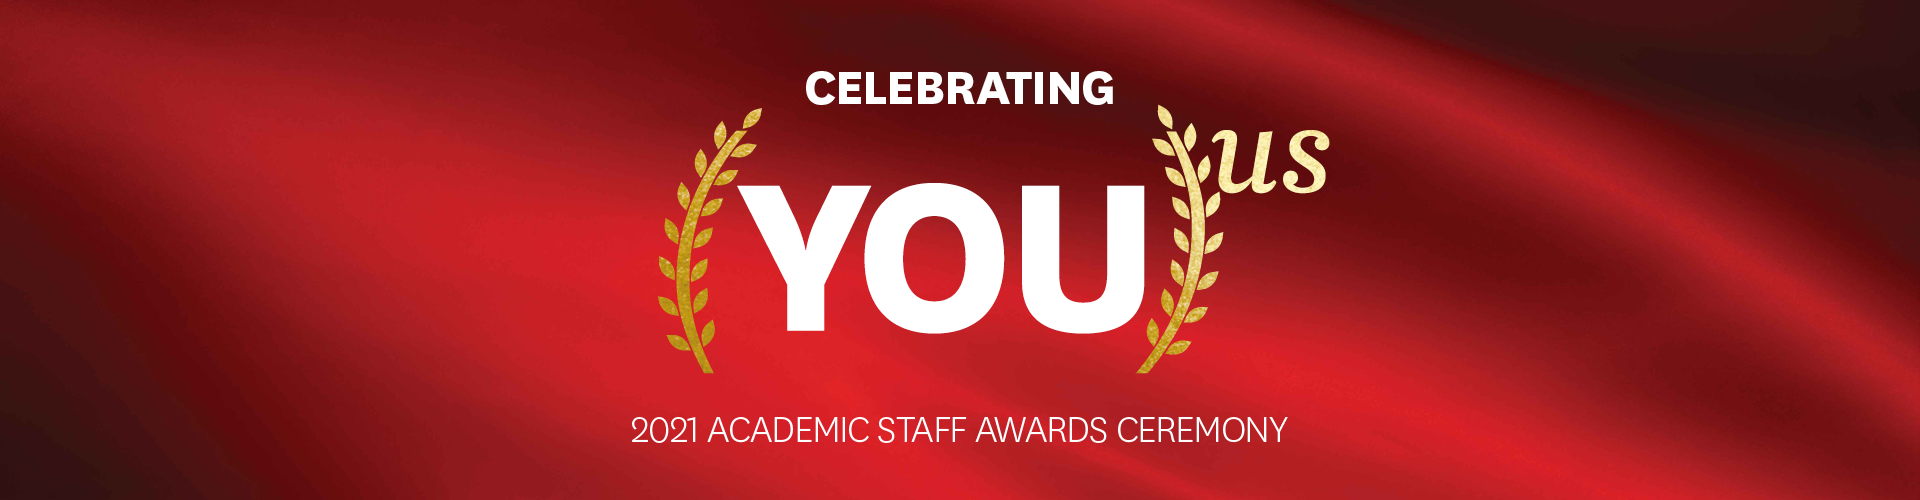 2021 Academic staff awards banner